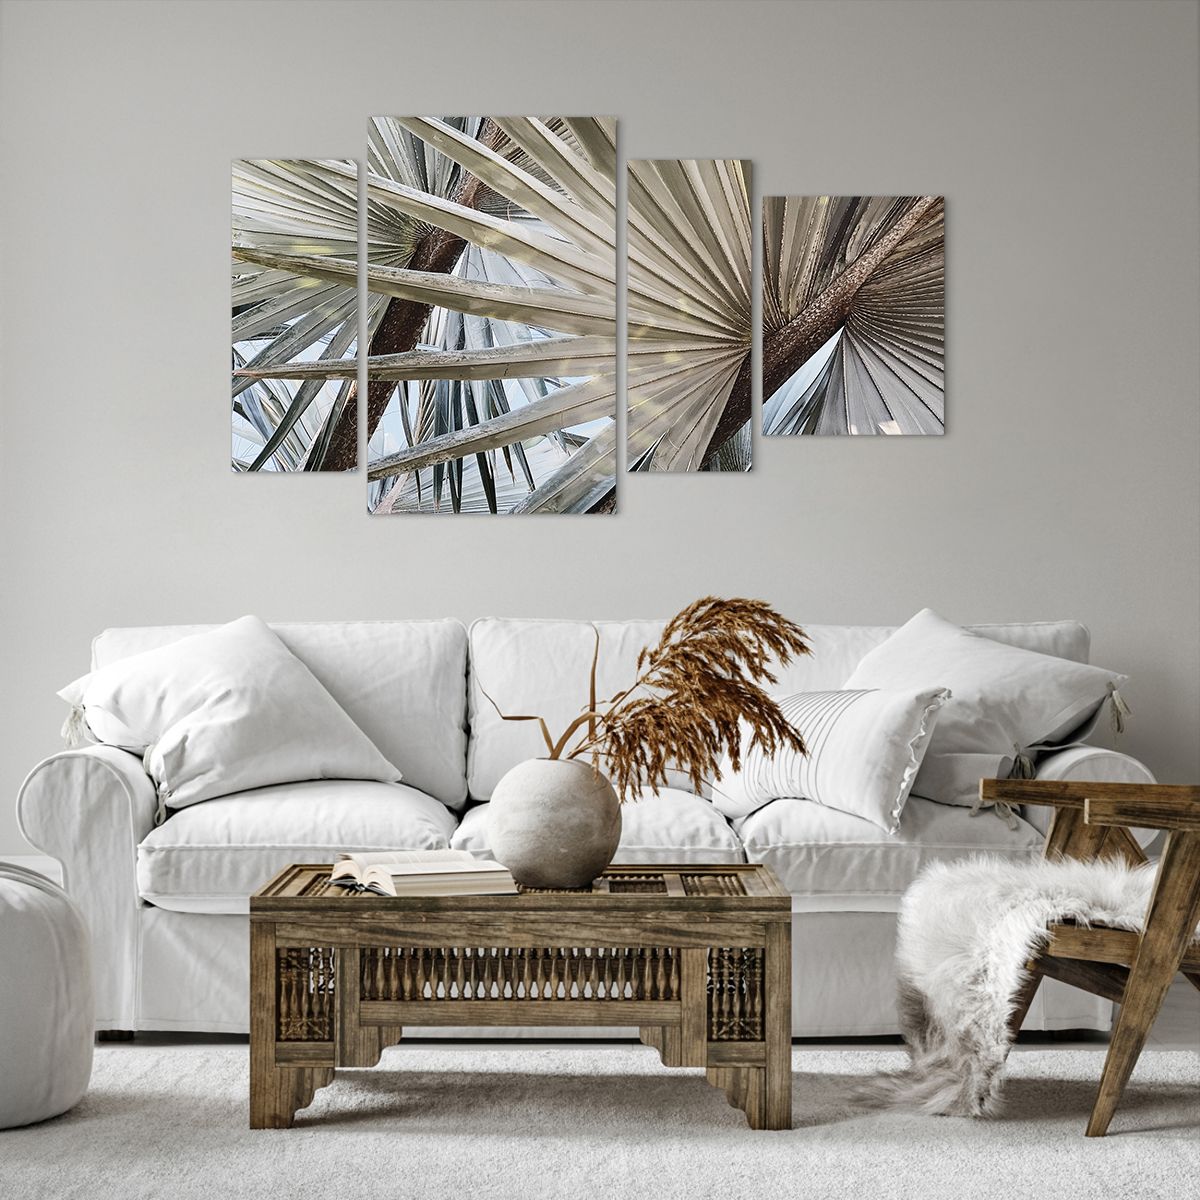 Bild auf Leinwand Palmblatt, Bild auf Leinwand Kokusnuss-Palme, Bild auf Leinwand Natur, Bild auf Leinwand Tropen, Bild auf Leinwand Exotische Pflanze